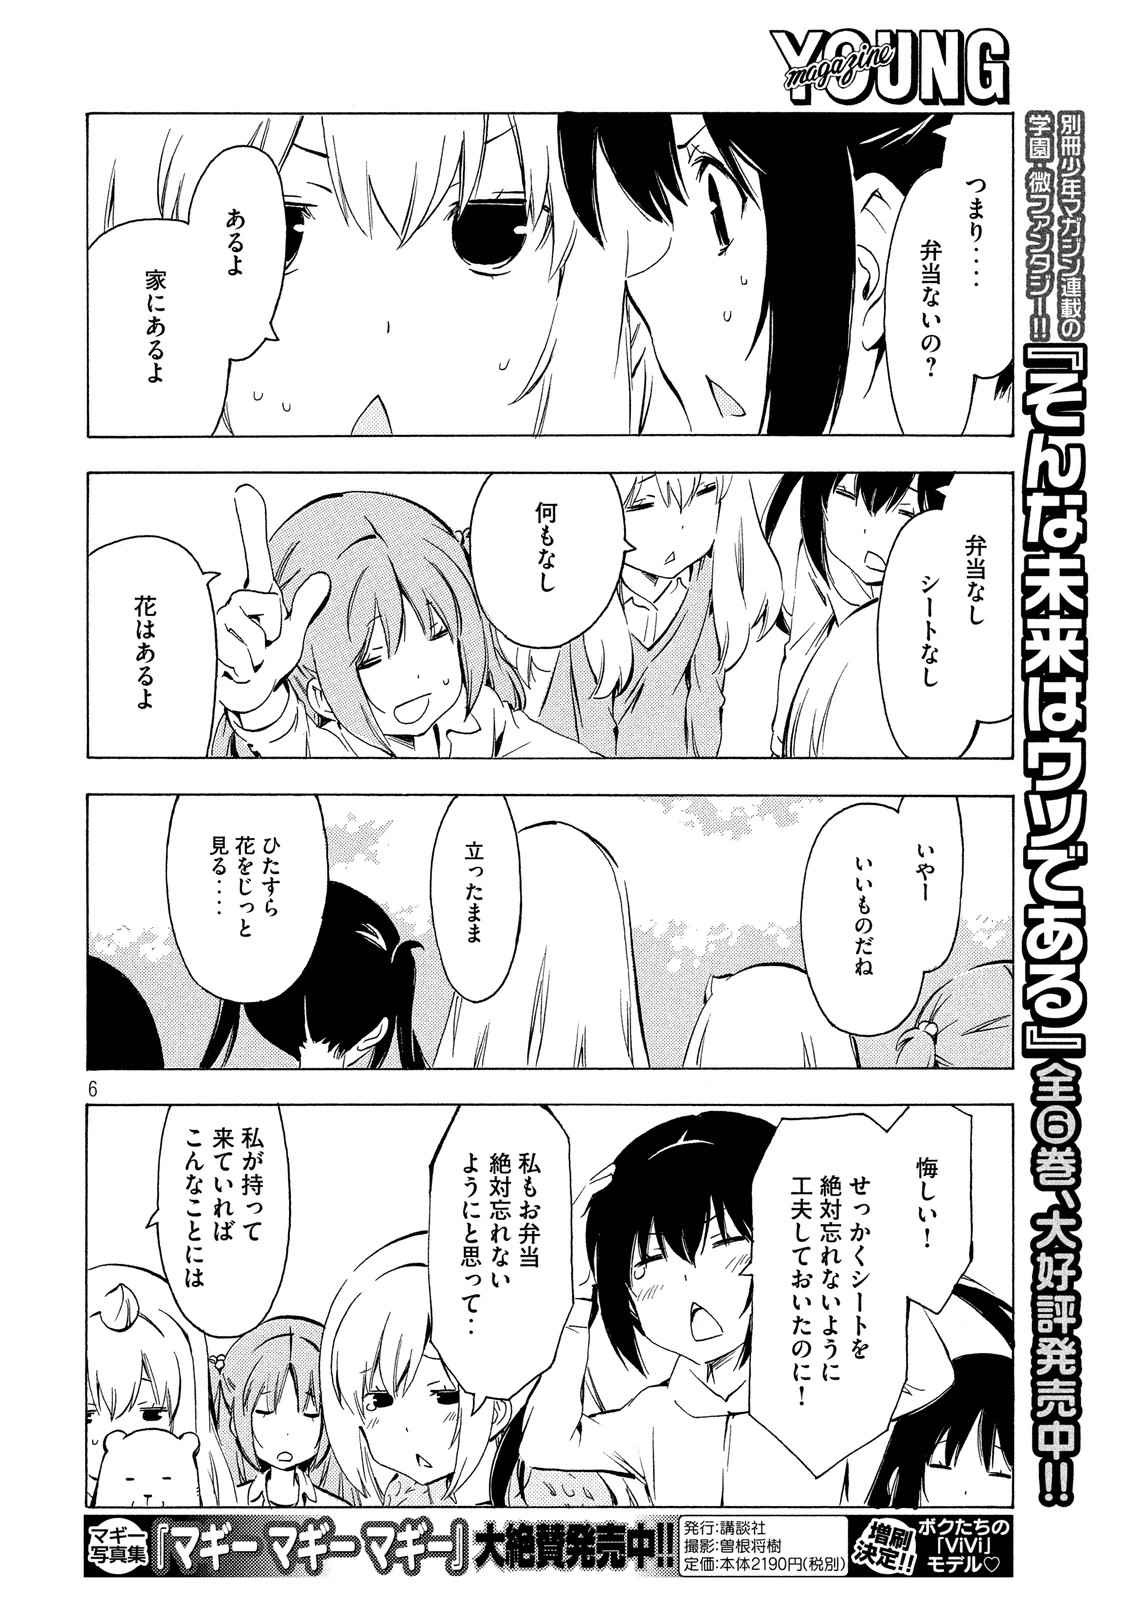 Minami-ke - Chapter 314 - Page 6